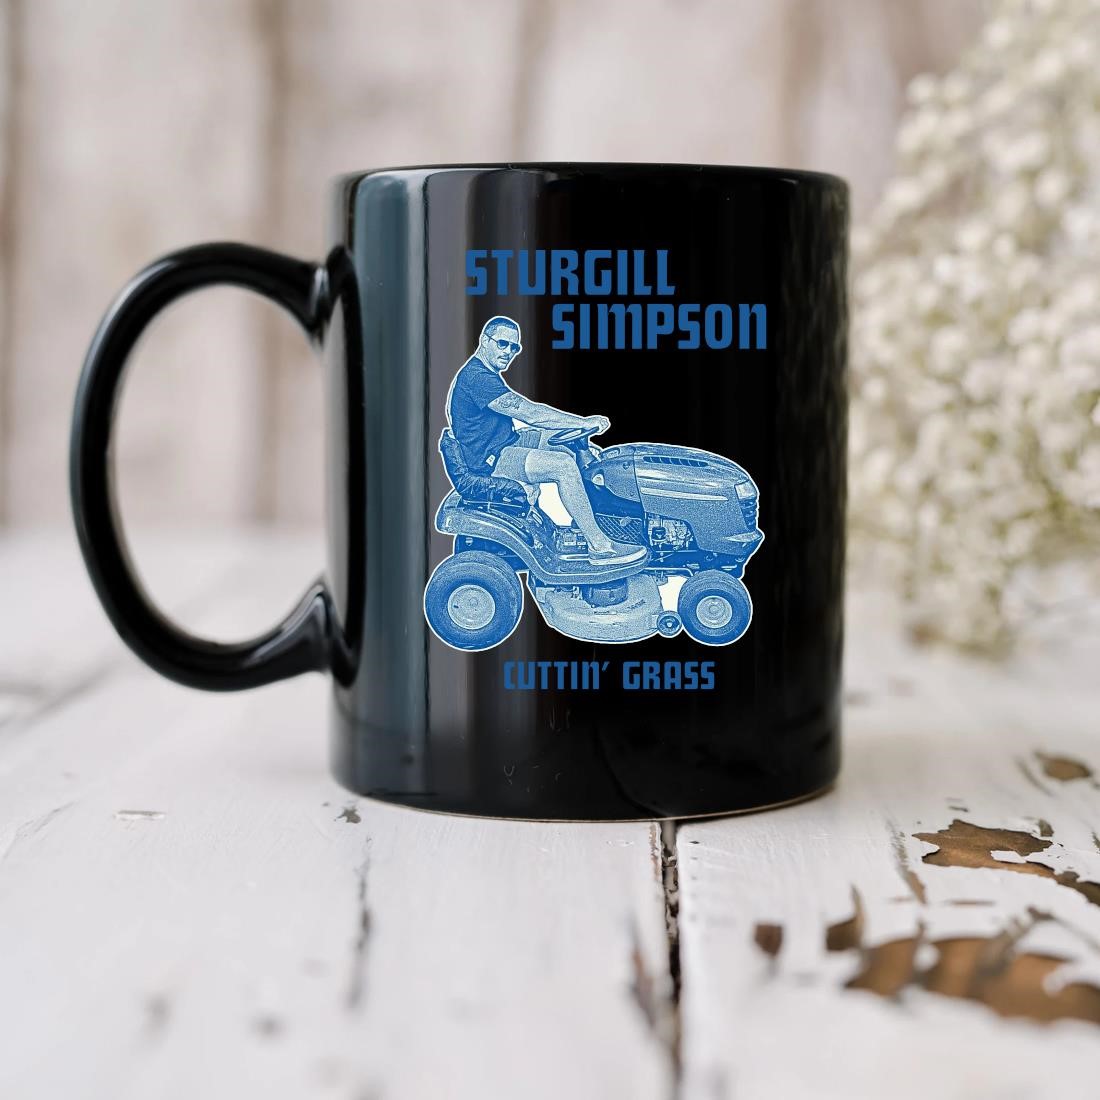 Original Sturgill Simpson Cuttin Grass Tie Dye Mug biu.jpg